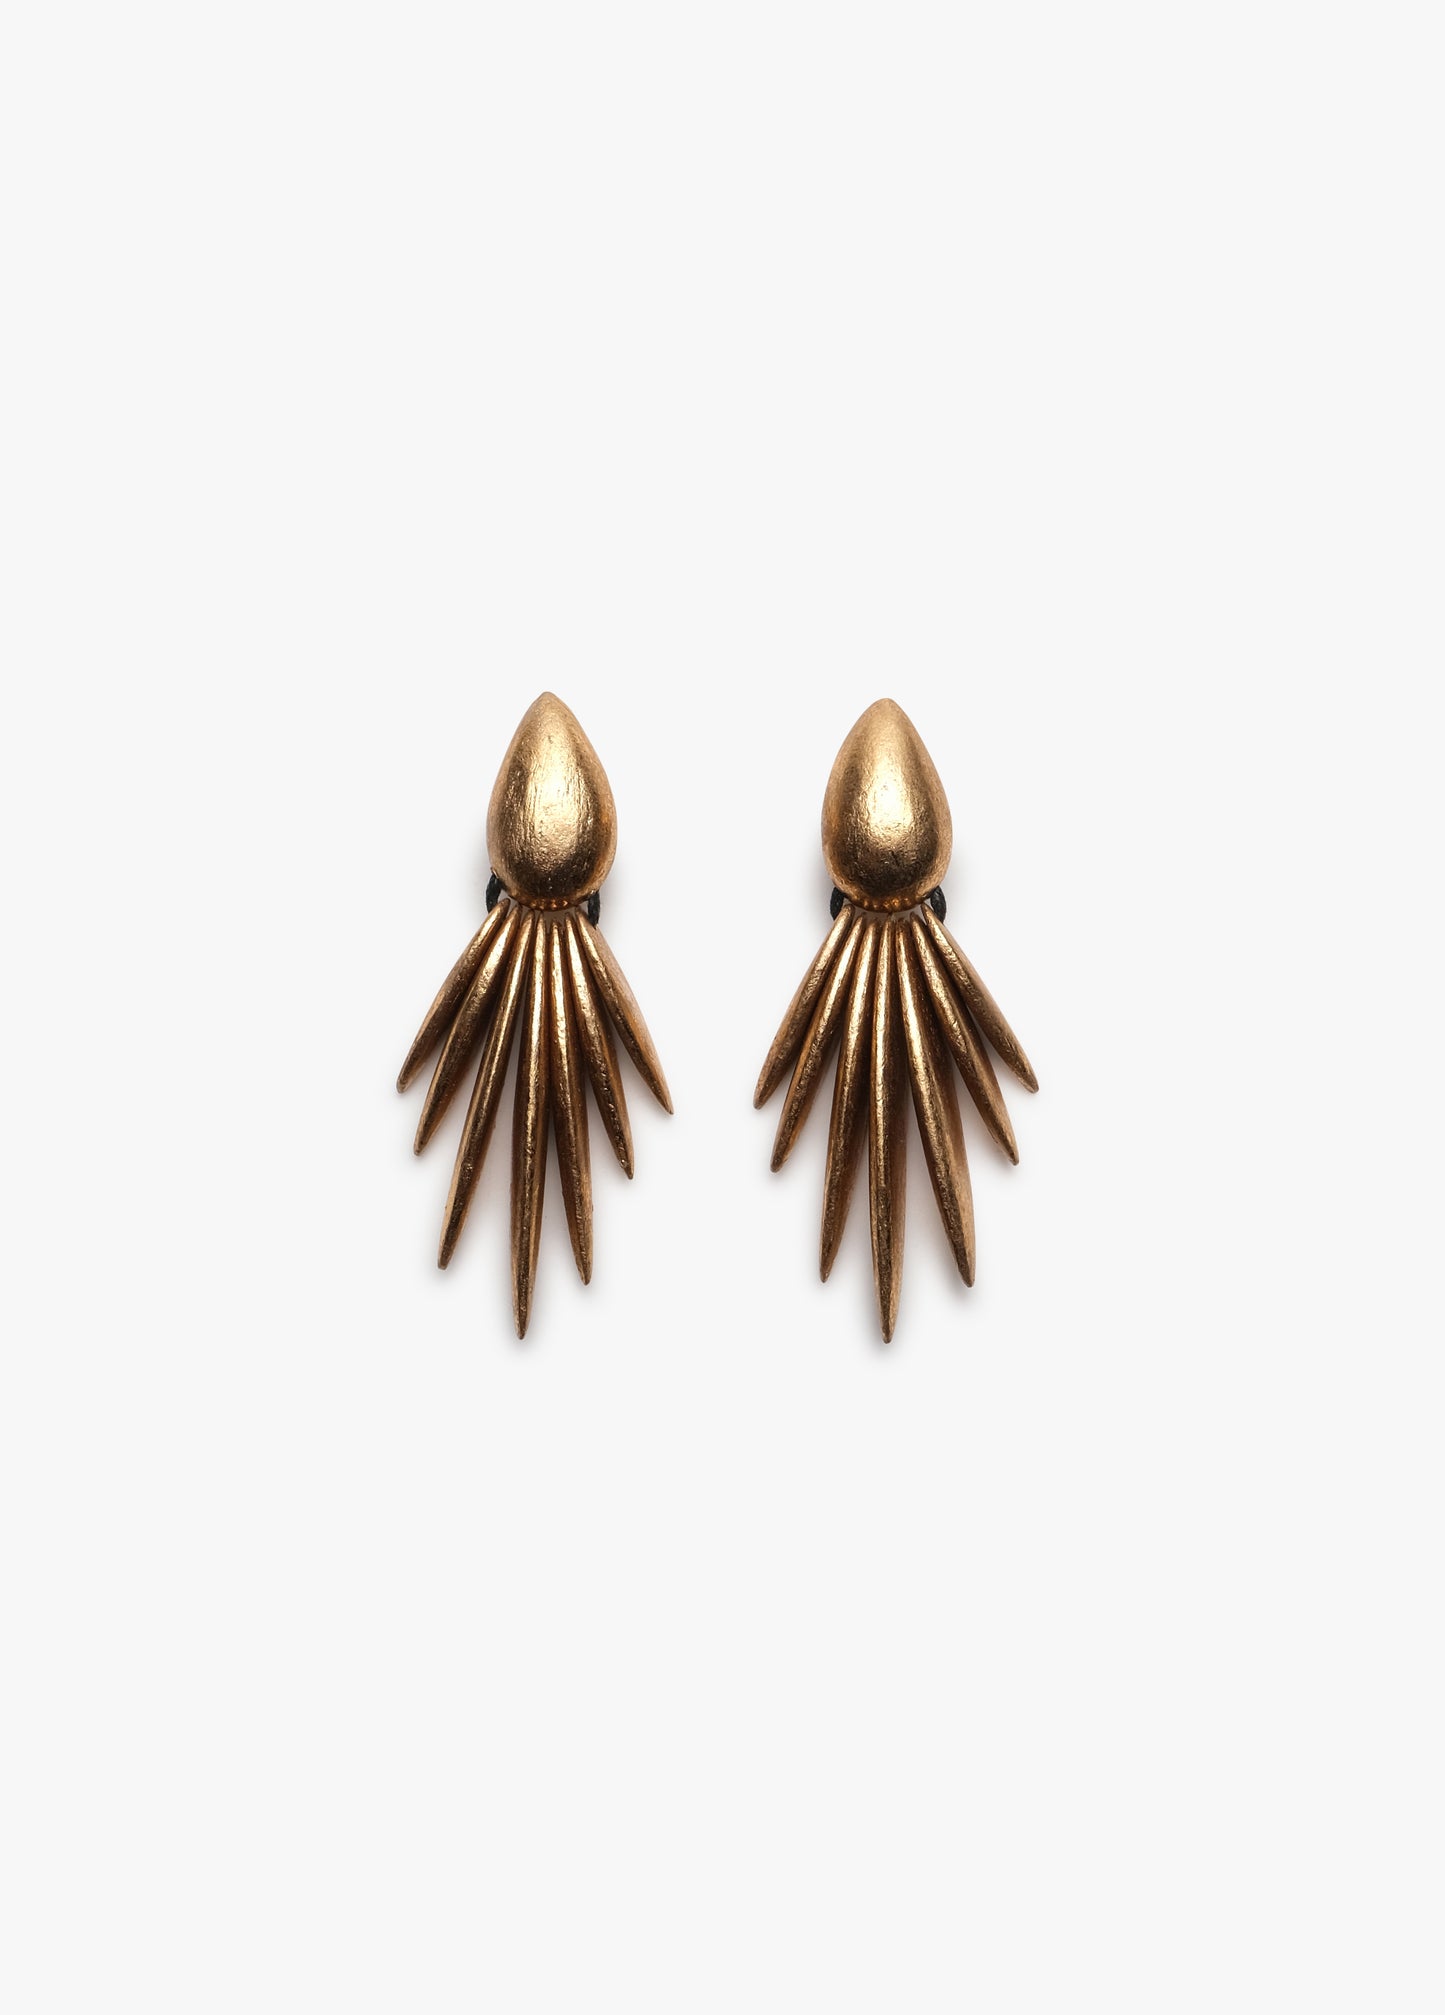 Monies Quasi earring: Acacia, goldfoil